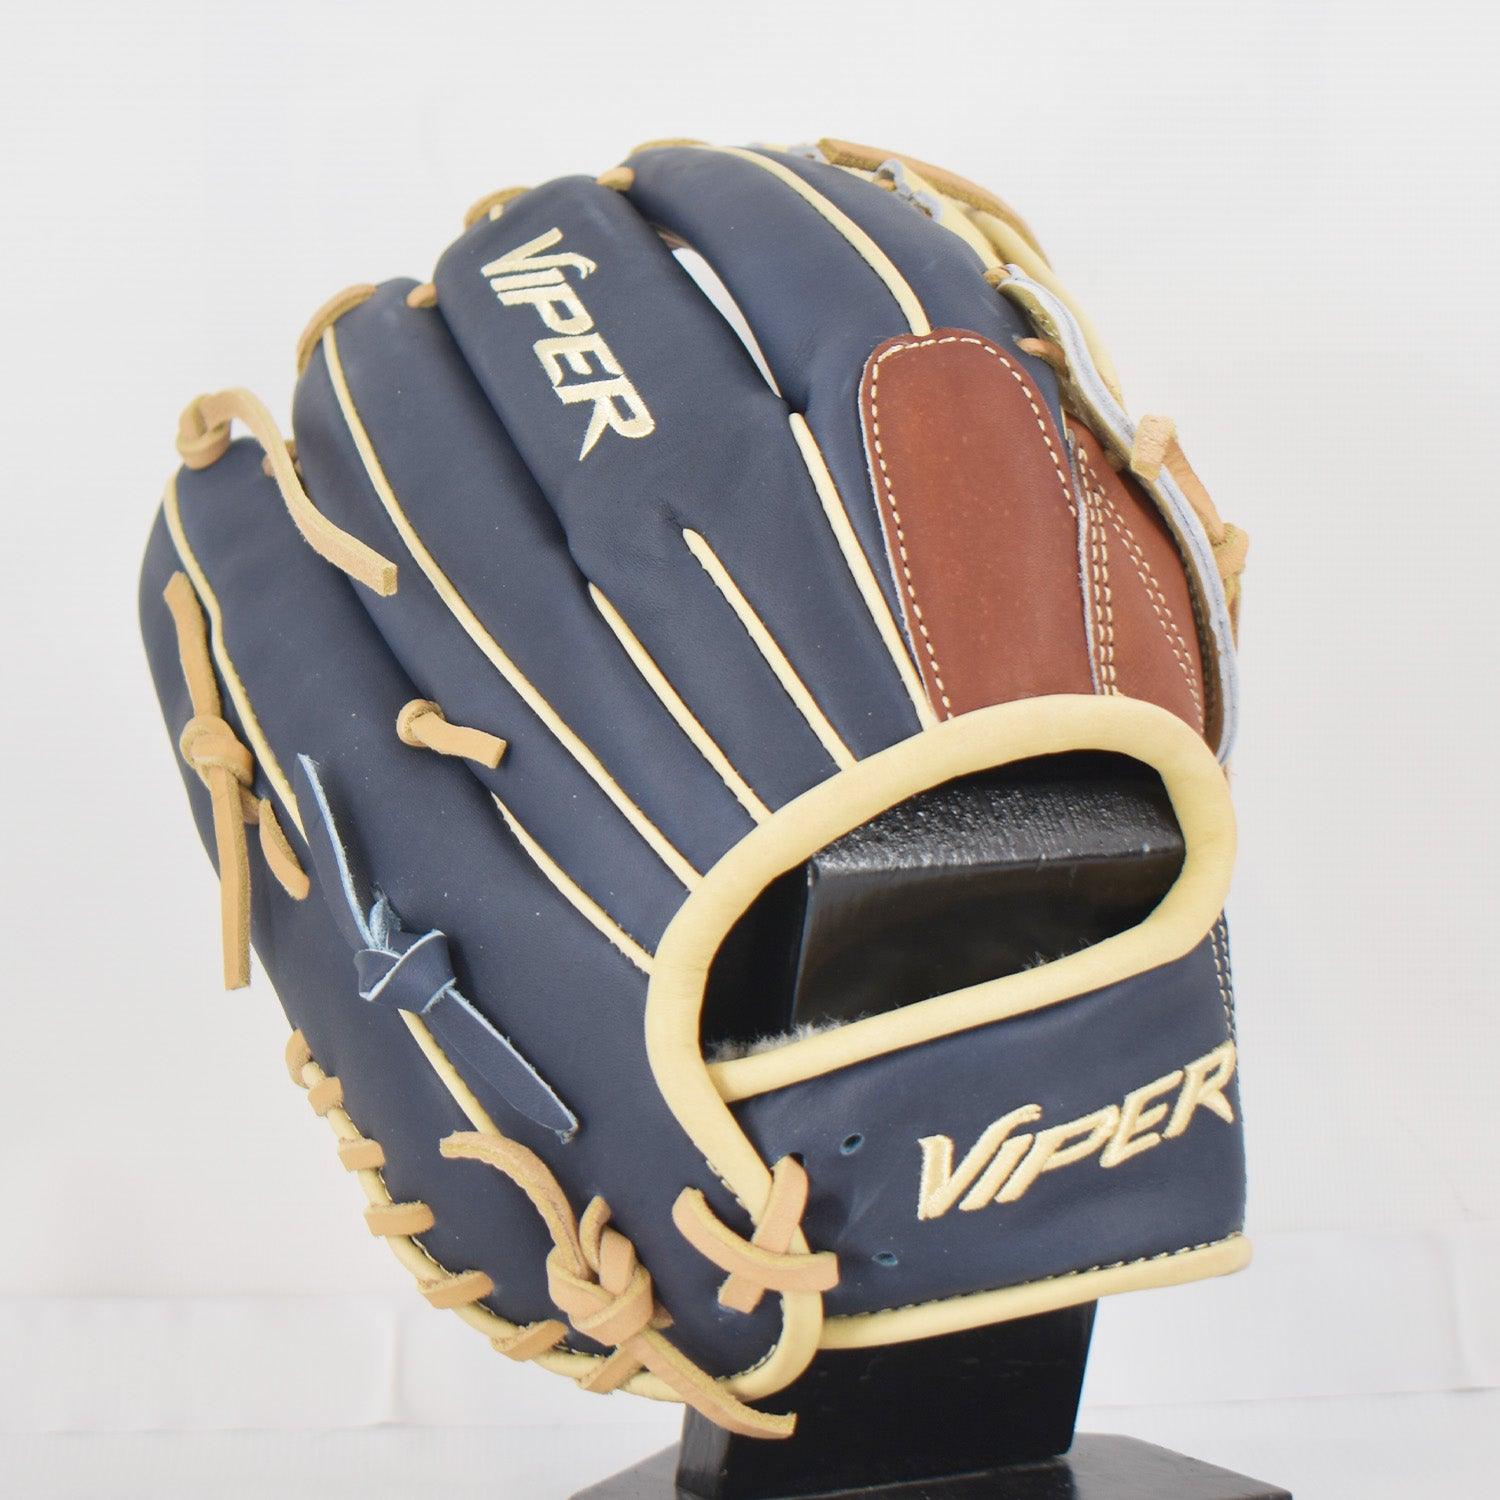 Viper Japanese Kip Leather Slowpitch Softball Fielding Glove Navy/Tan/Carmel - Smash It Sports